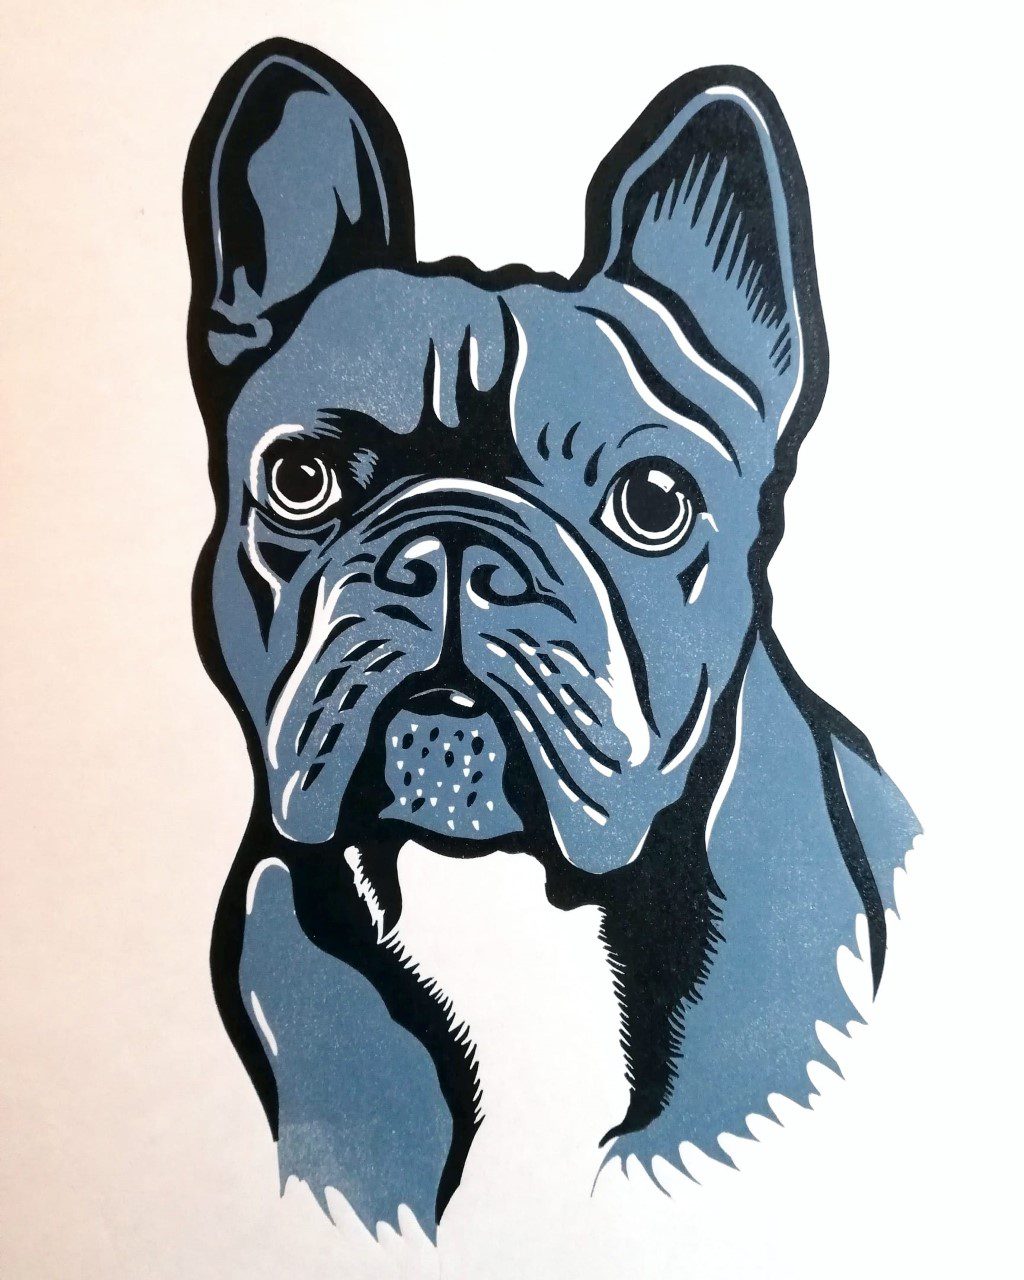 Lino print of a dog